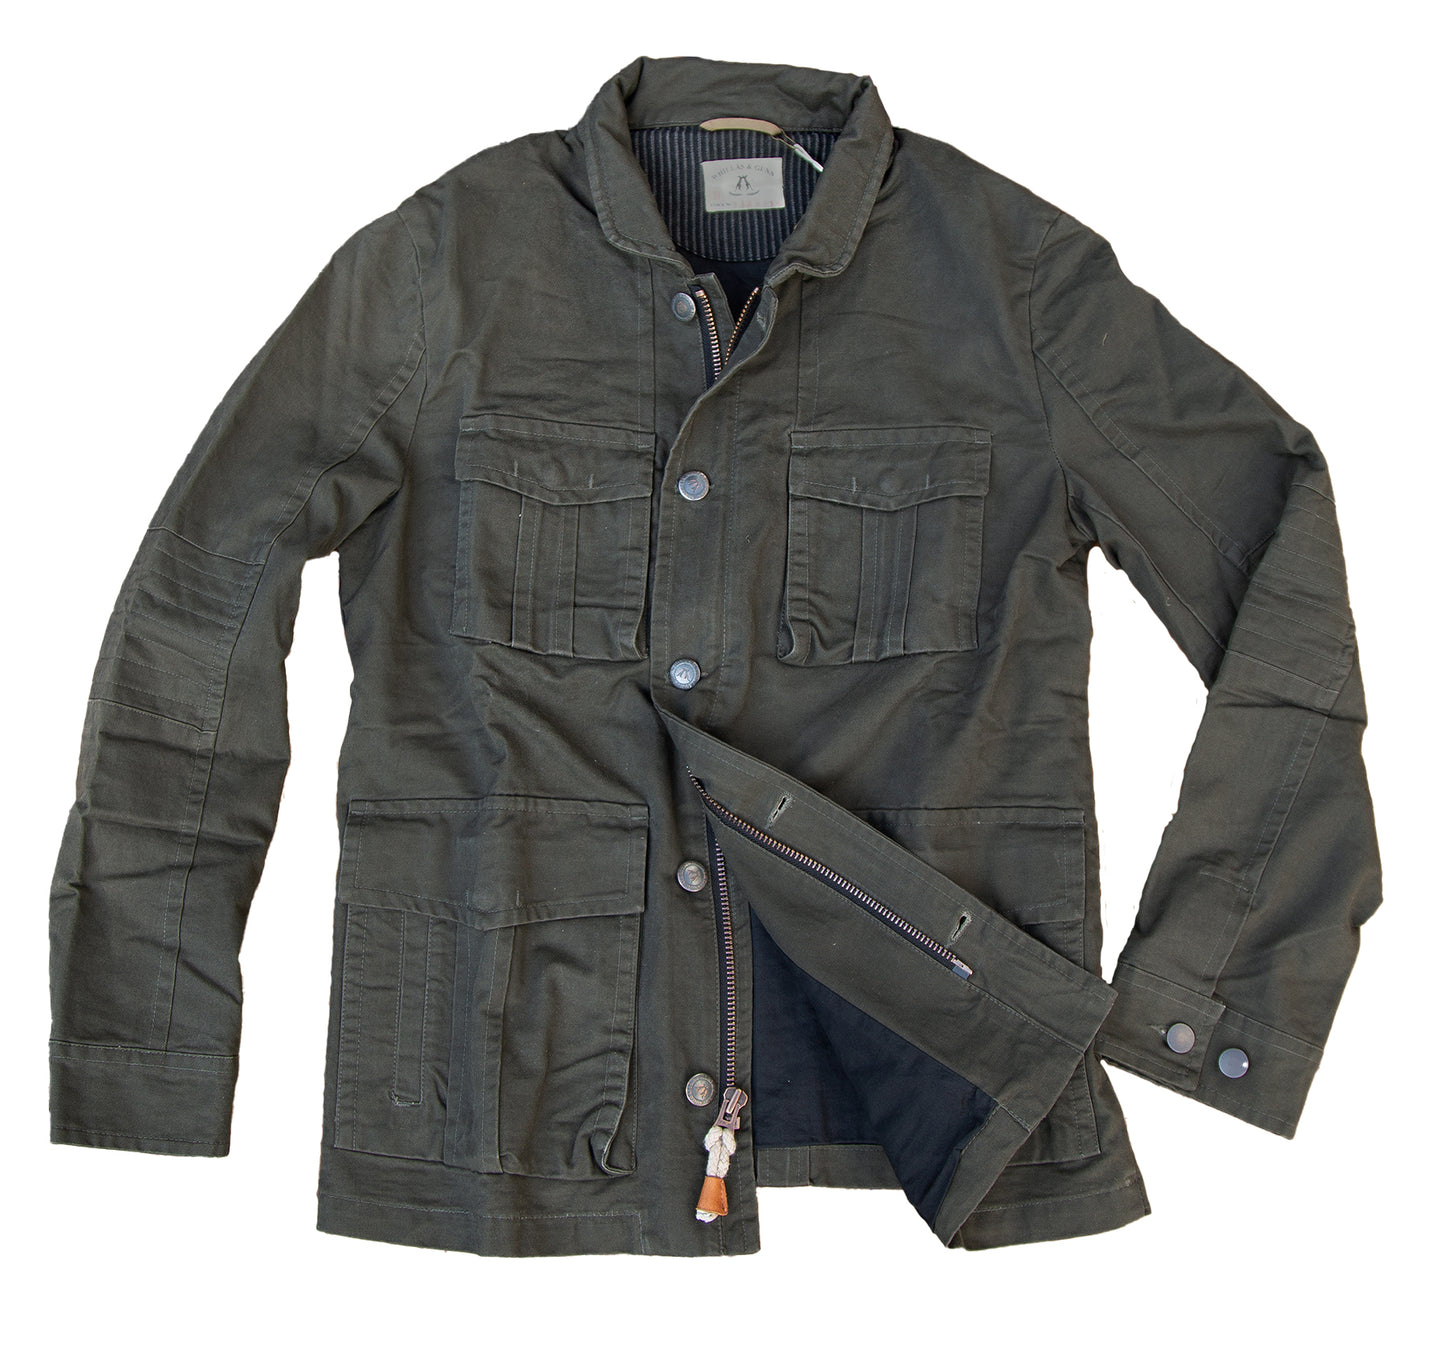 Australia Style Outdoor | Men's jacket Field Jacket Whillas and Gunn Collection